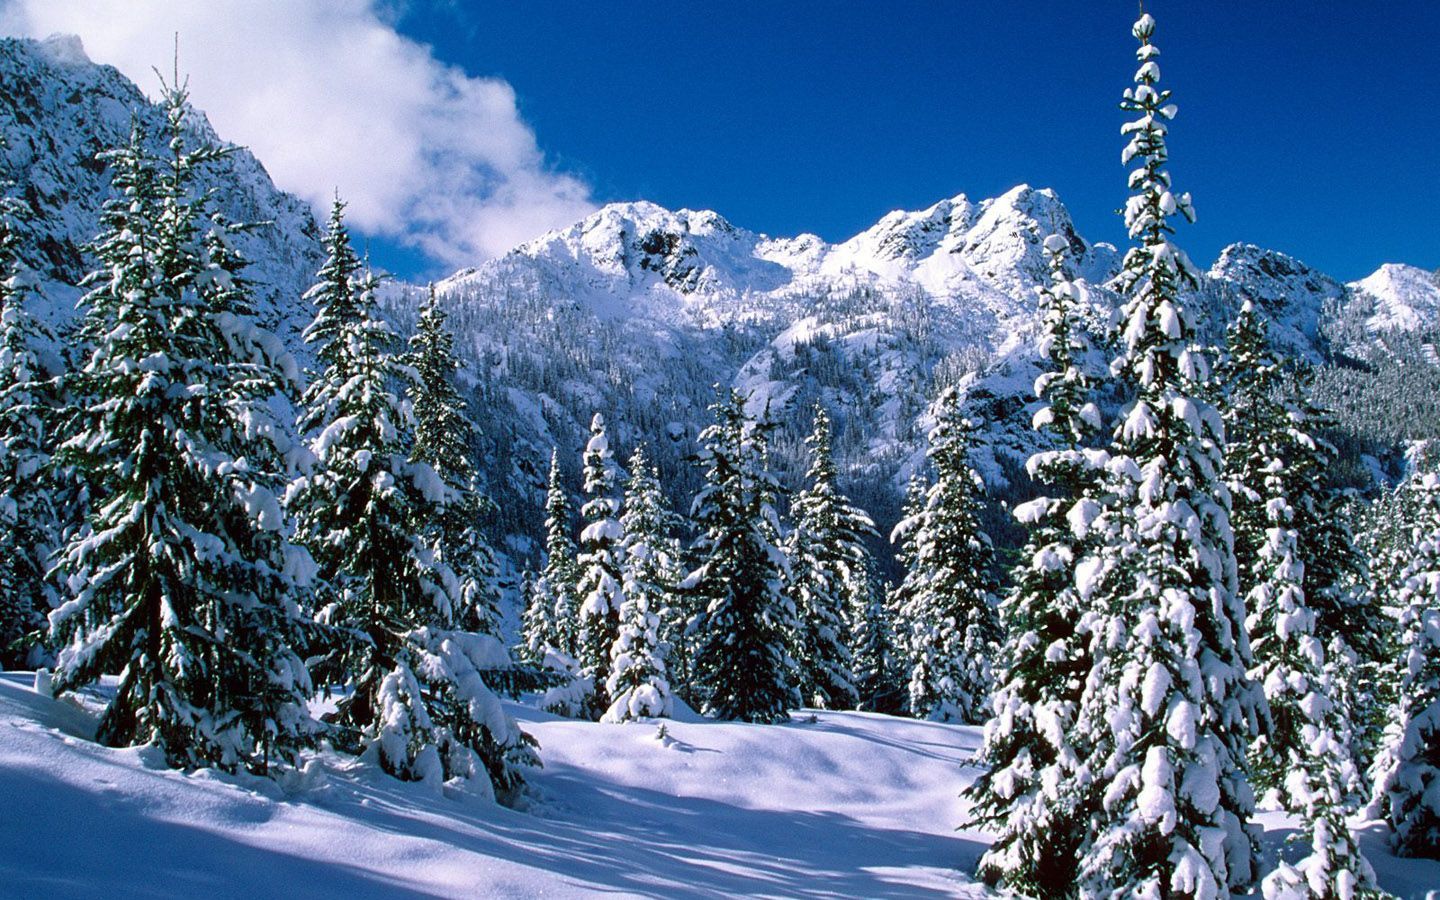 Winter Wonderland Scenes. Winter wonderland, Dreamy Snow Scene wallpaper 1440x900 NO.46 Deskto. Winter wallpaper, Winter landscape, Winter landscape photography